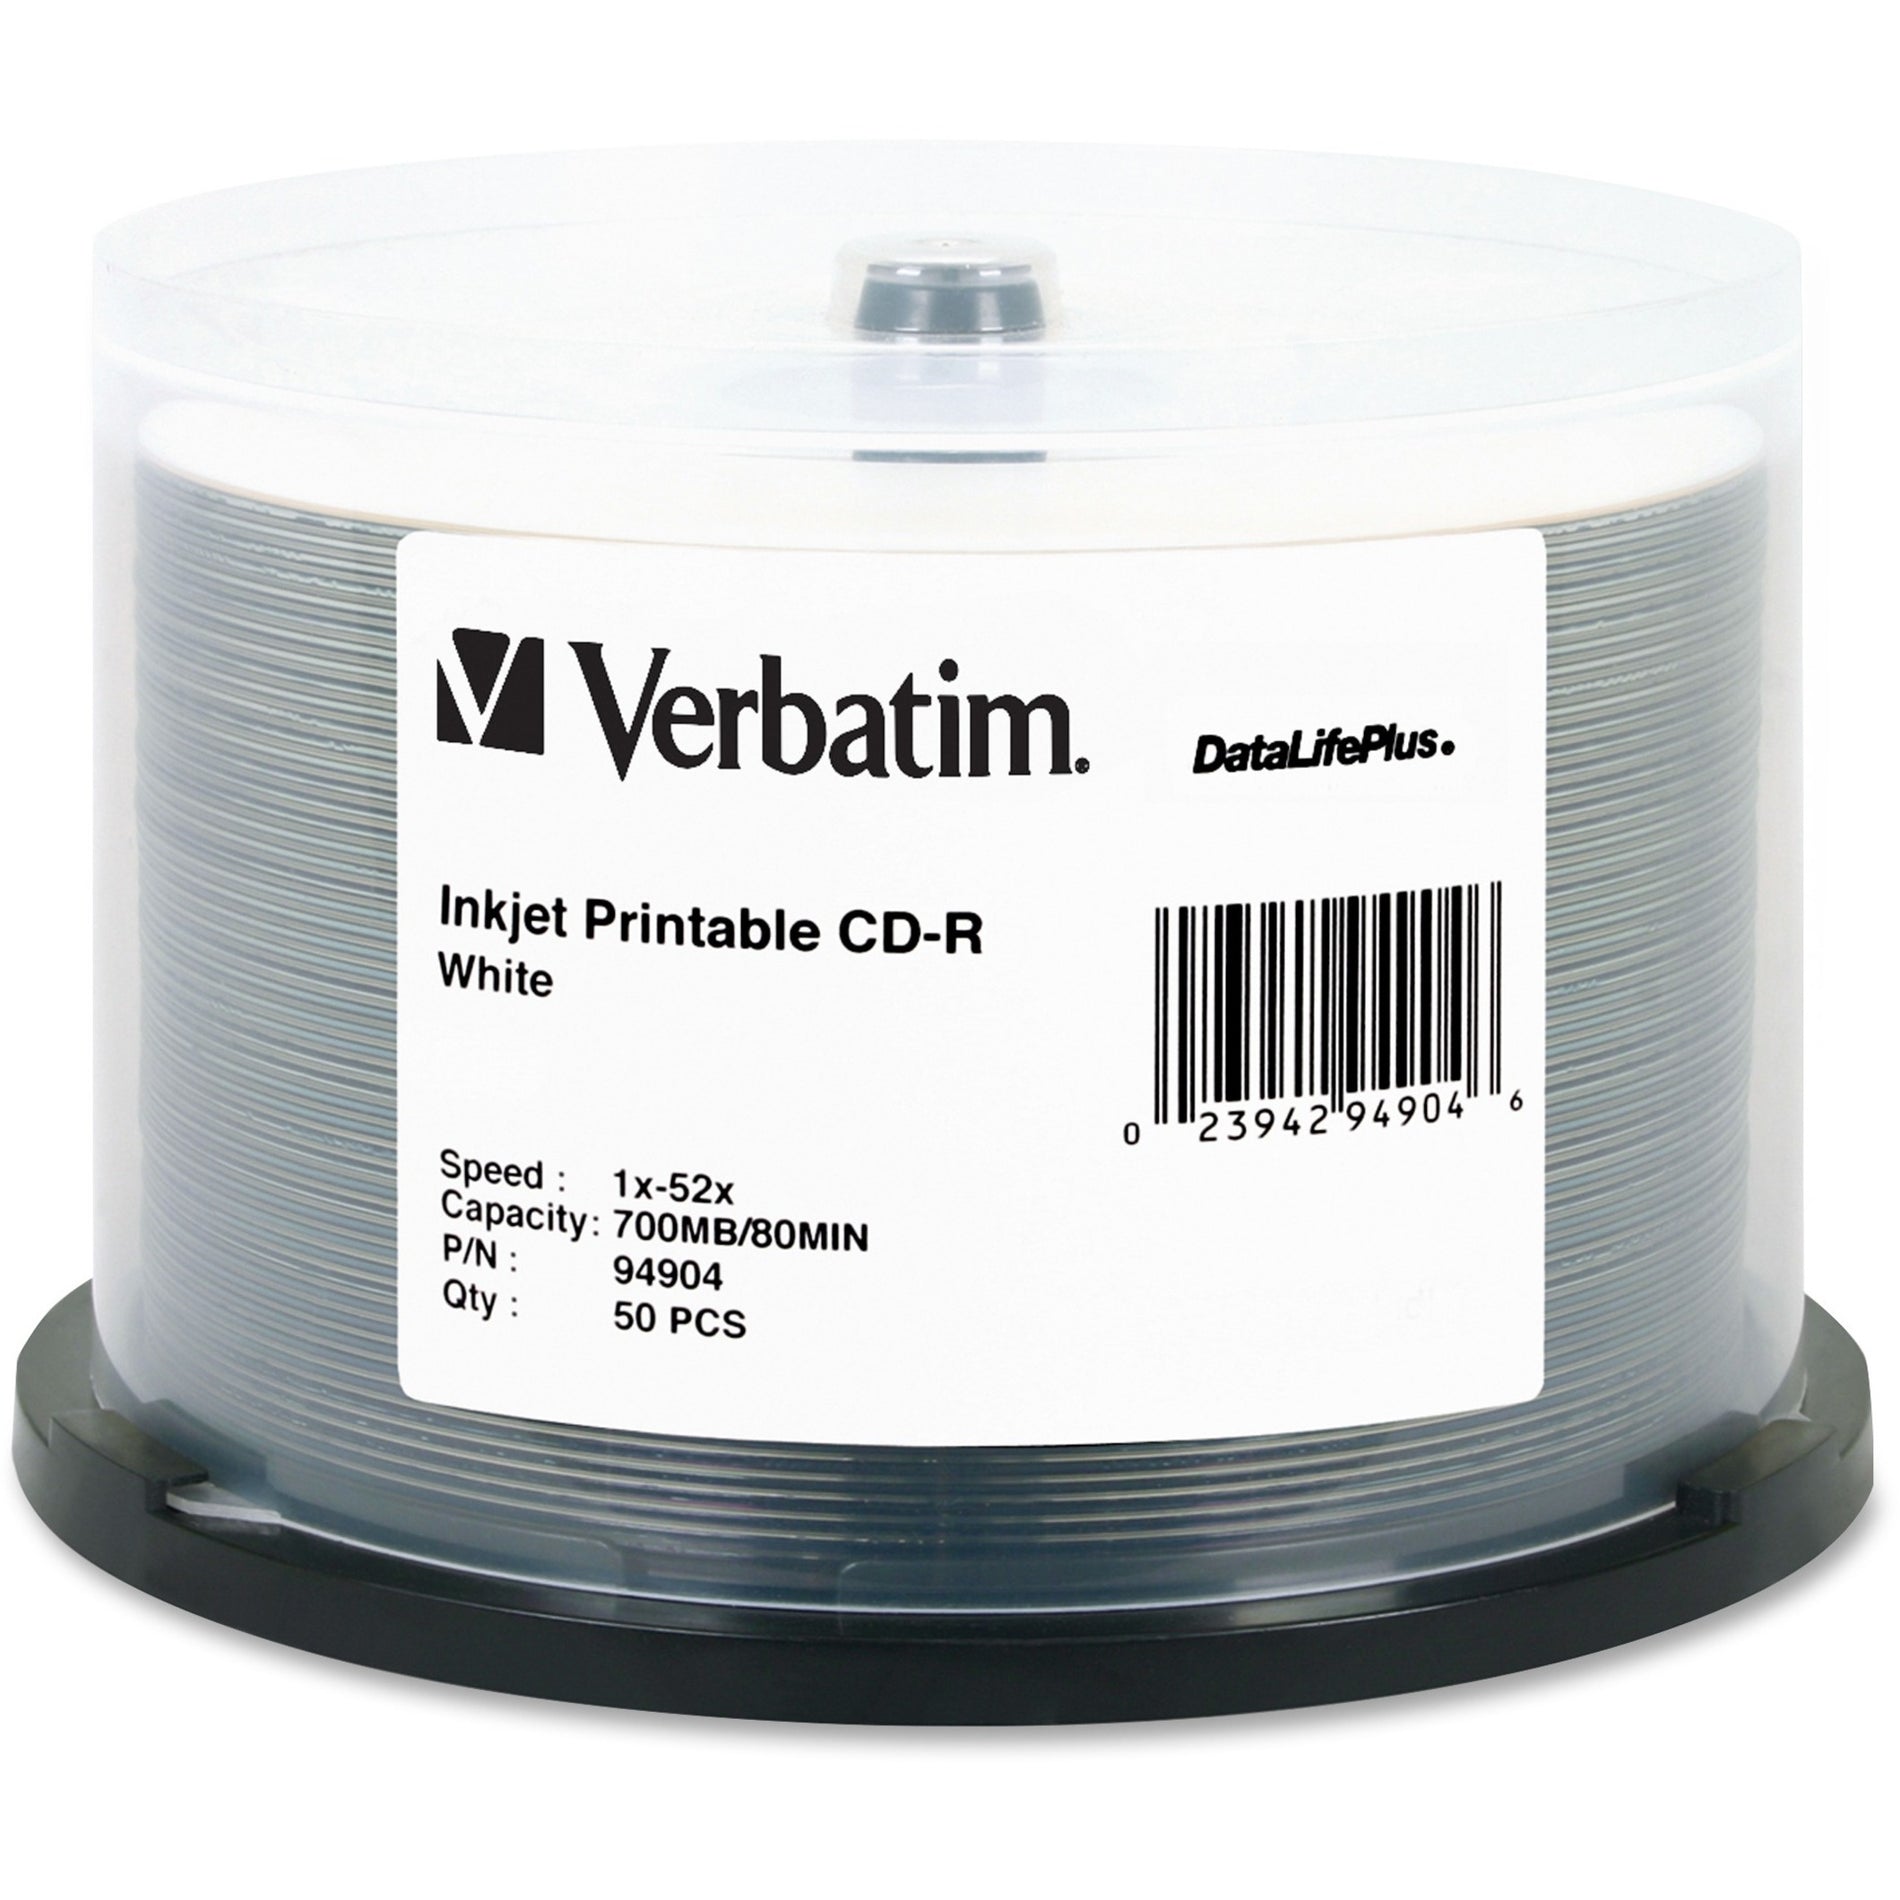 Verbatim 94904 CD-R 700MB 52X DataLifePlus Spindle, Inkjet Printable White, 50/PK